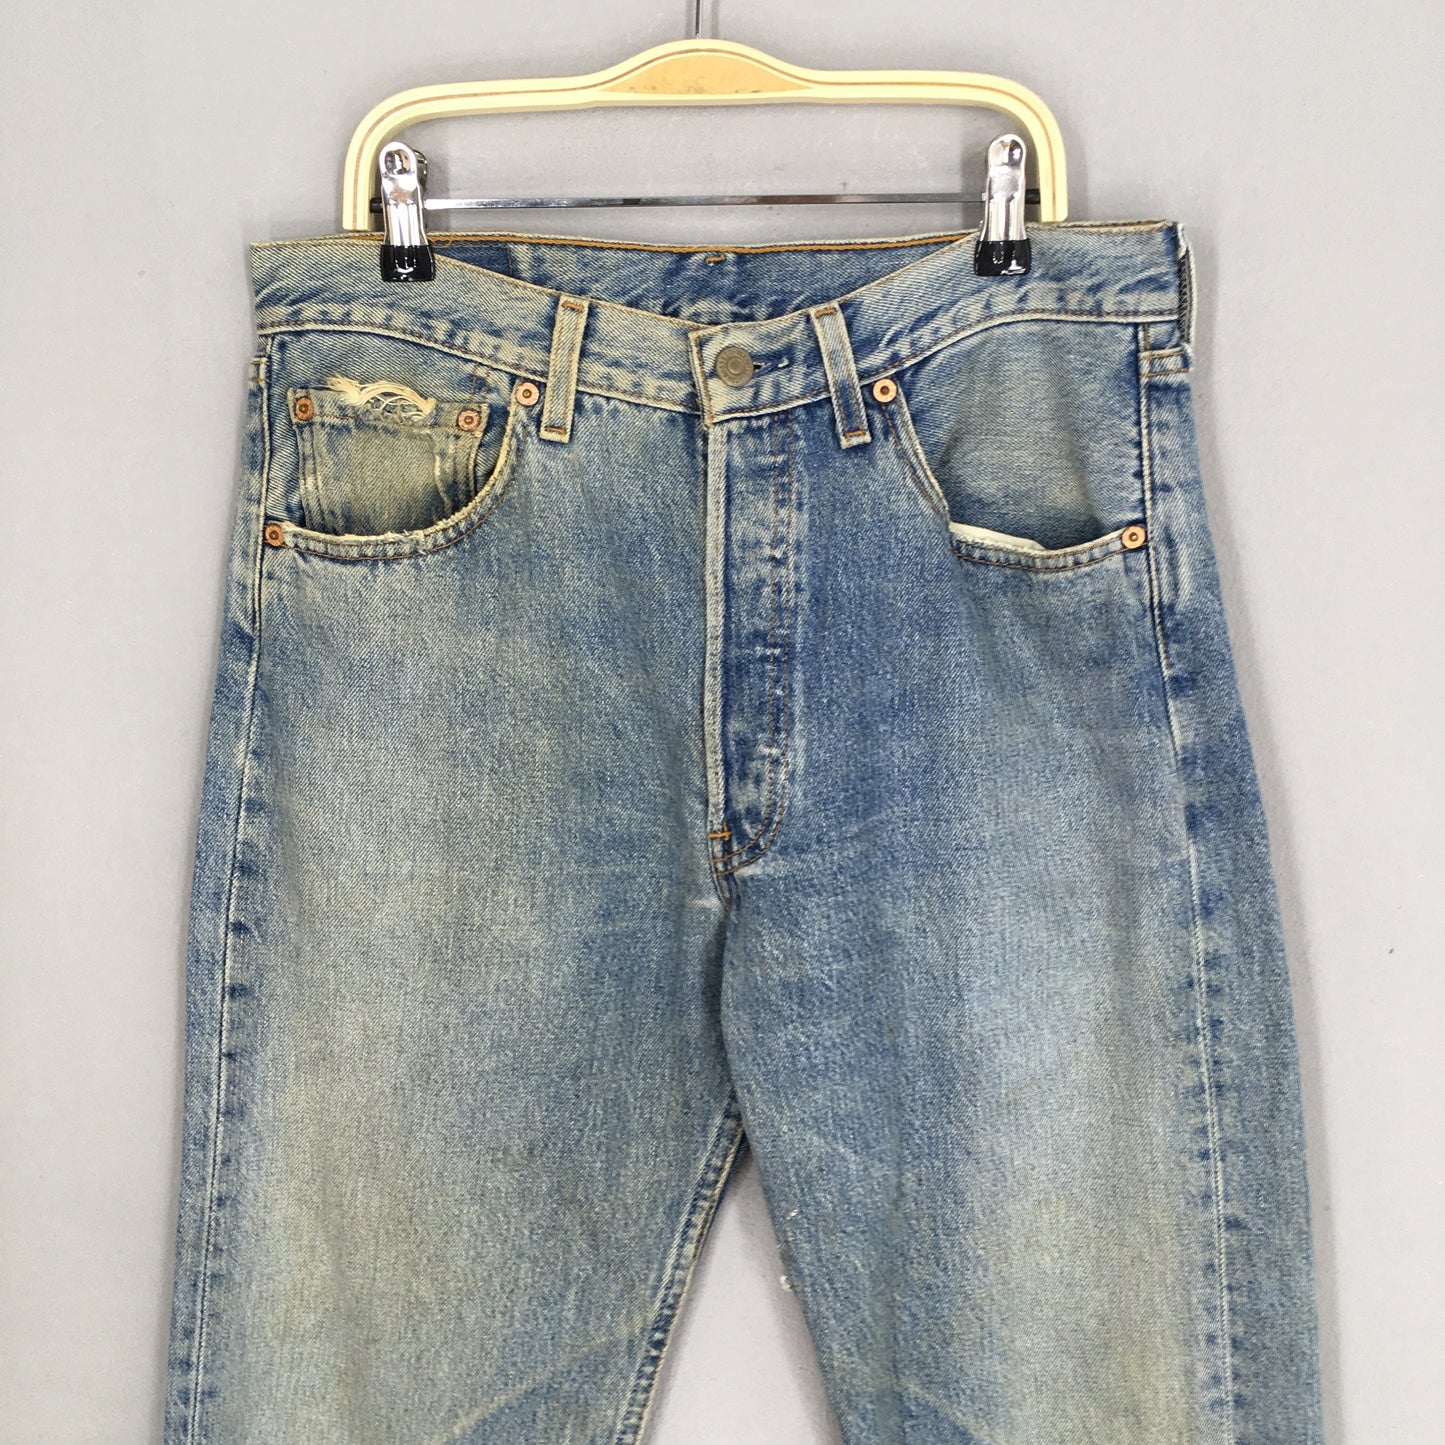 Levi's 501 Faded Dirty Stonewash Jeans Size 29x32.5